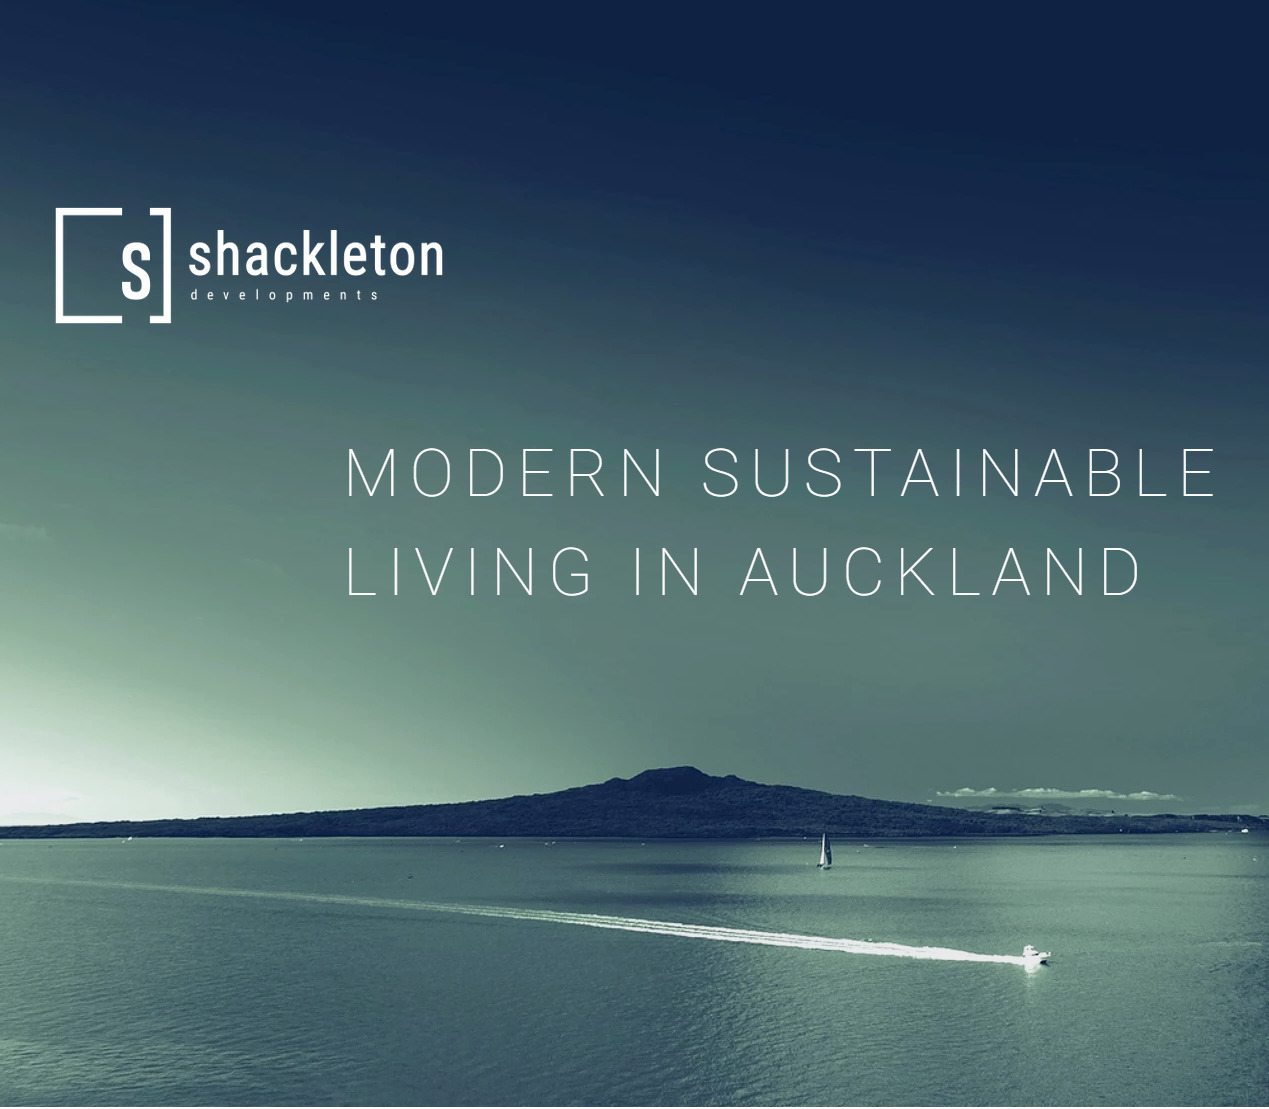 Shackleton Developments, Auckland